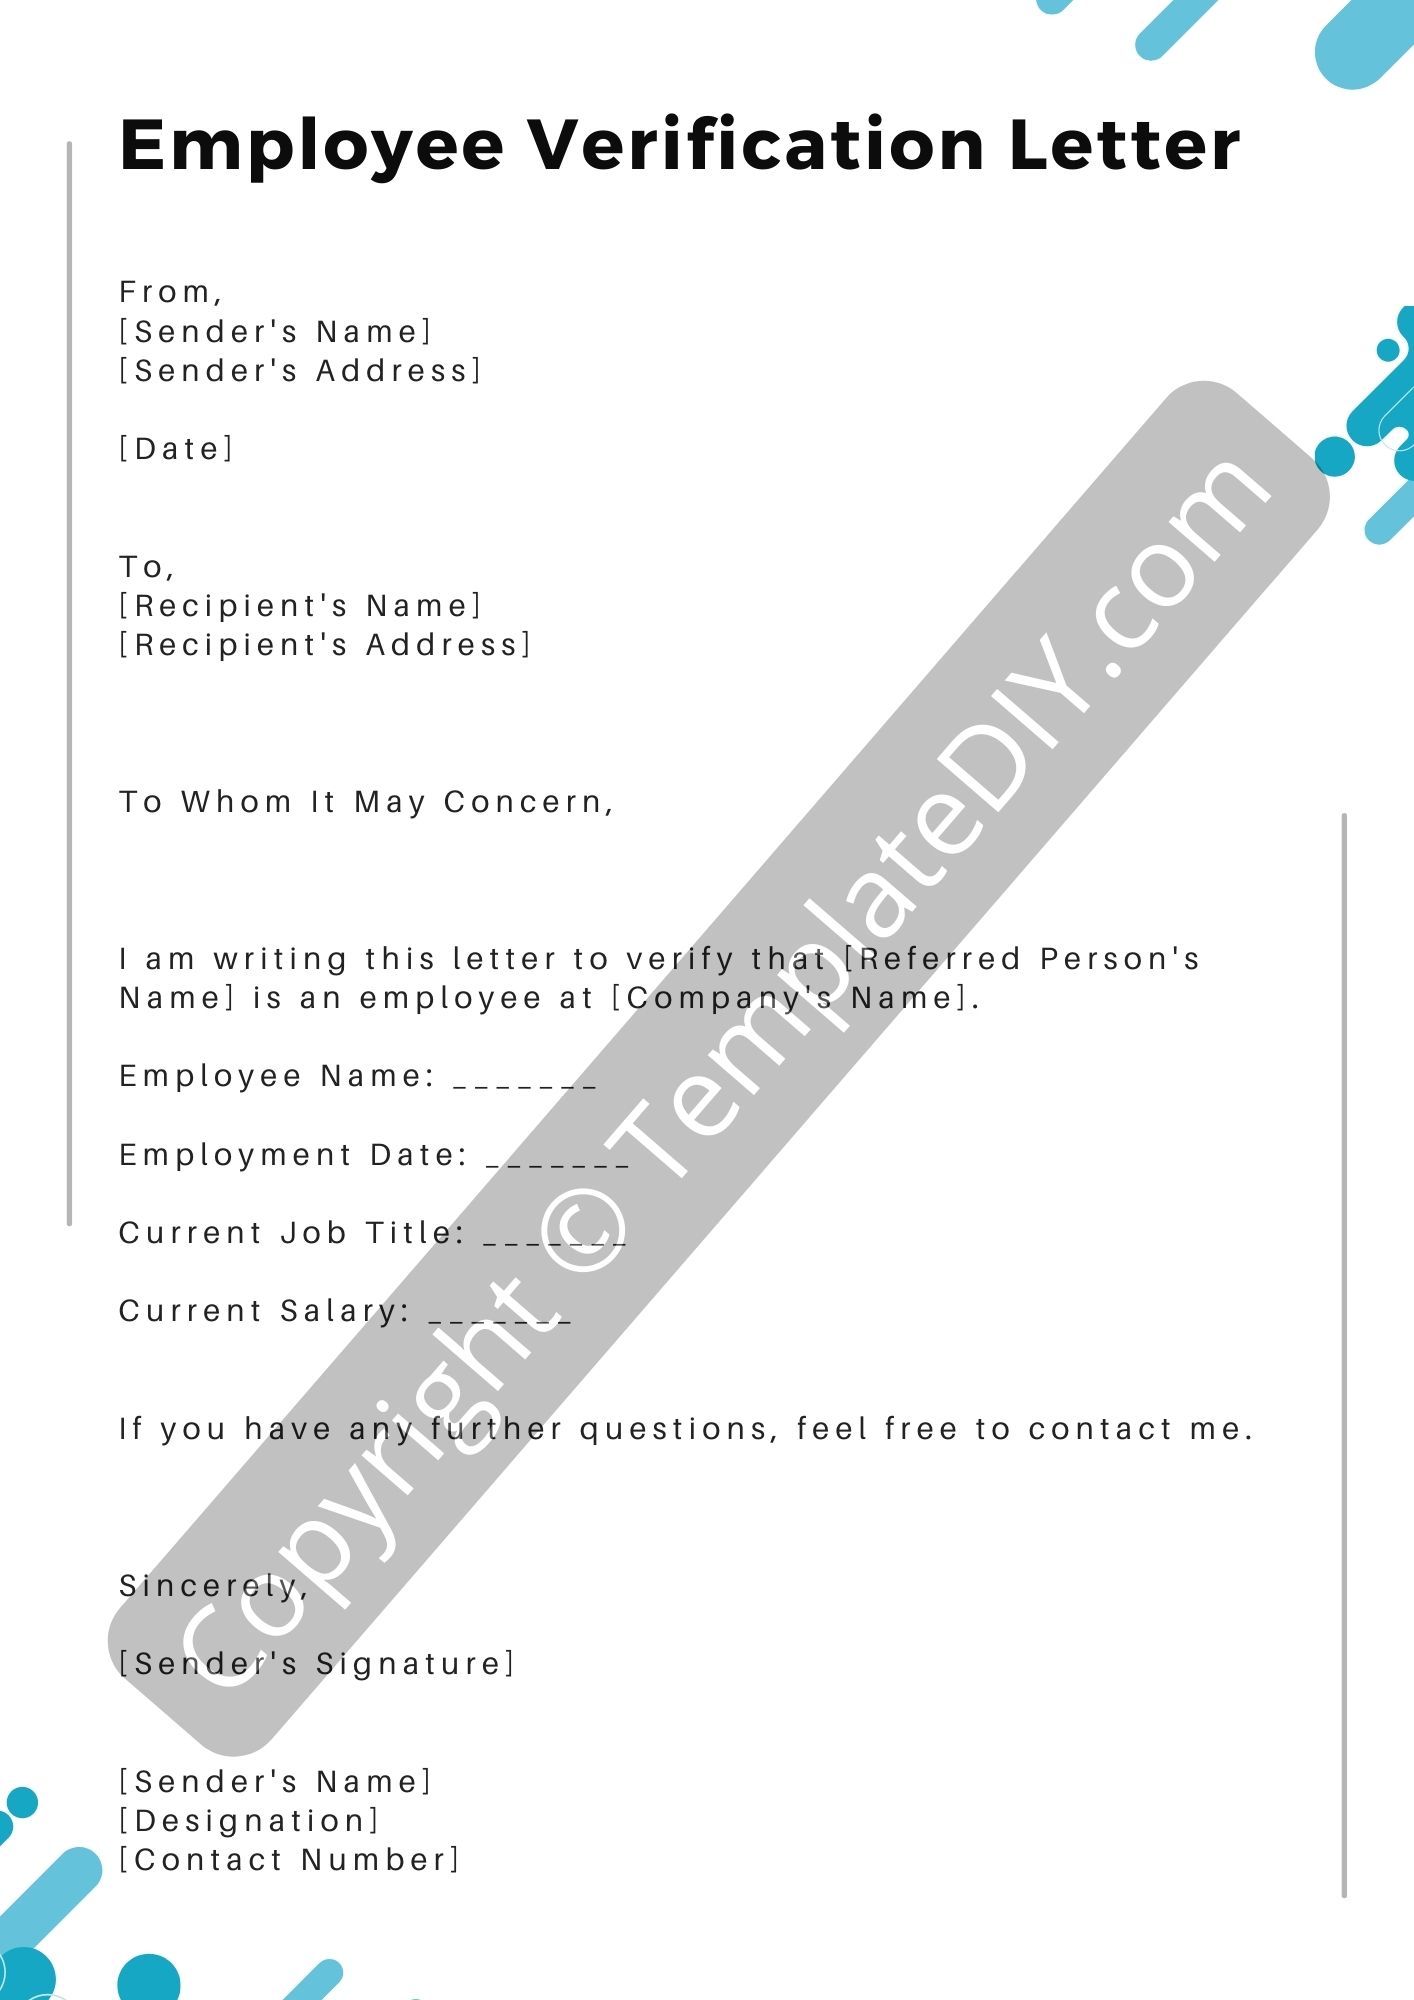 Employee Verification Letter Template